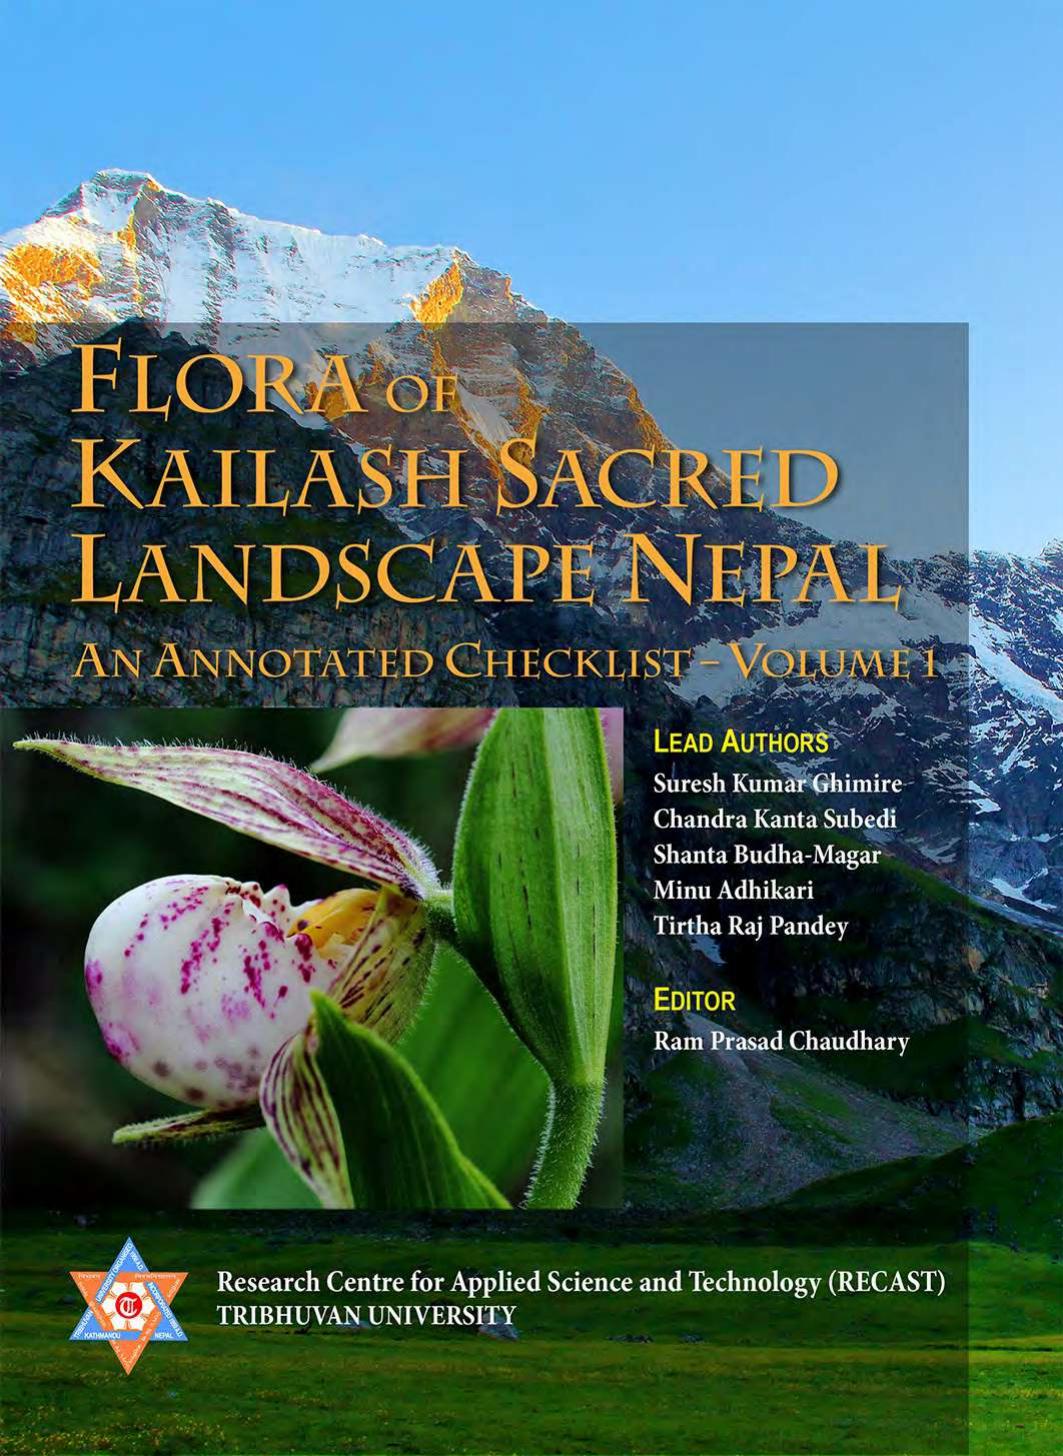 Flora of Kailash Sacred Landscape Nepal